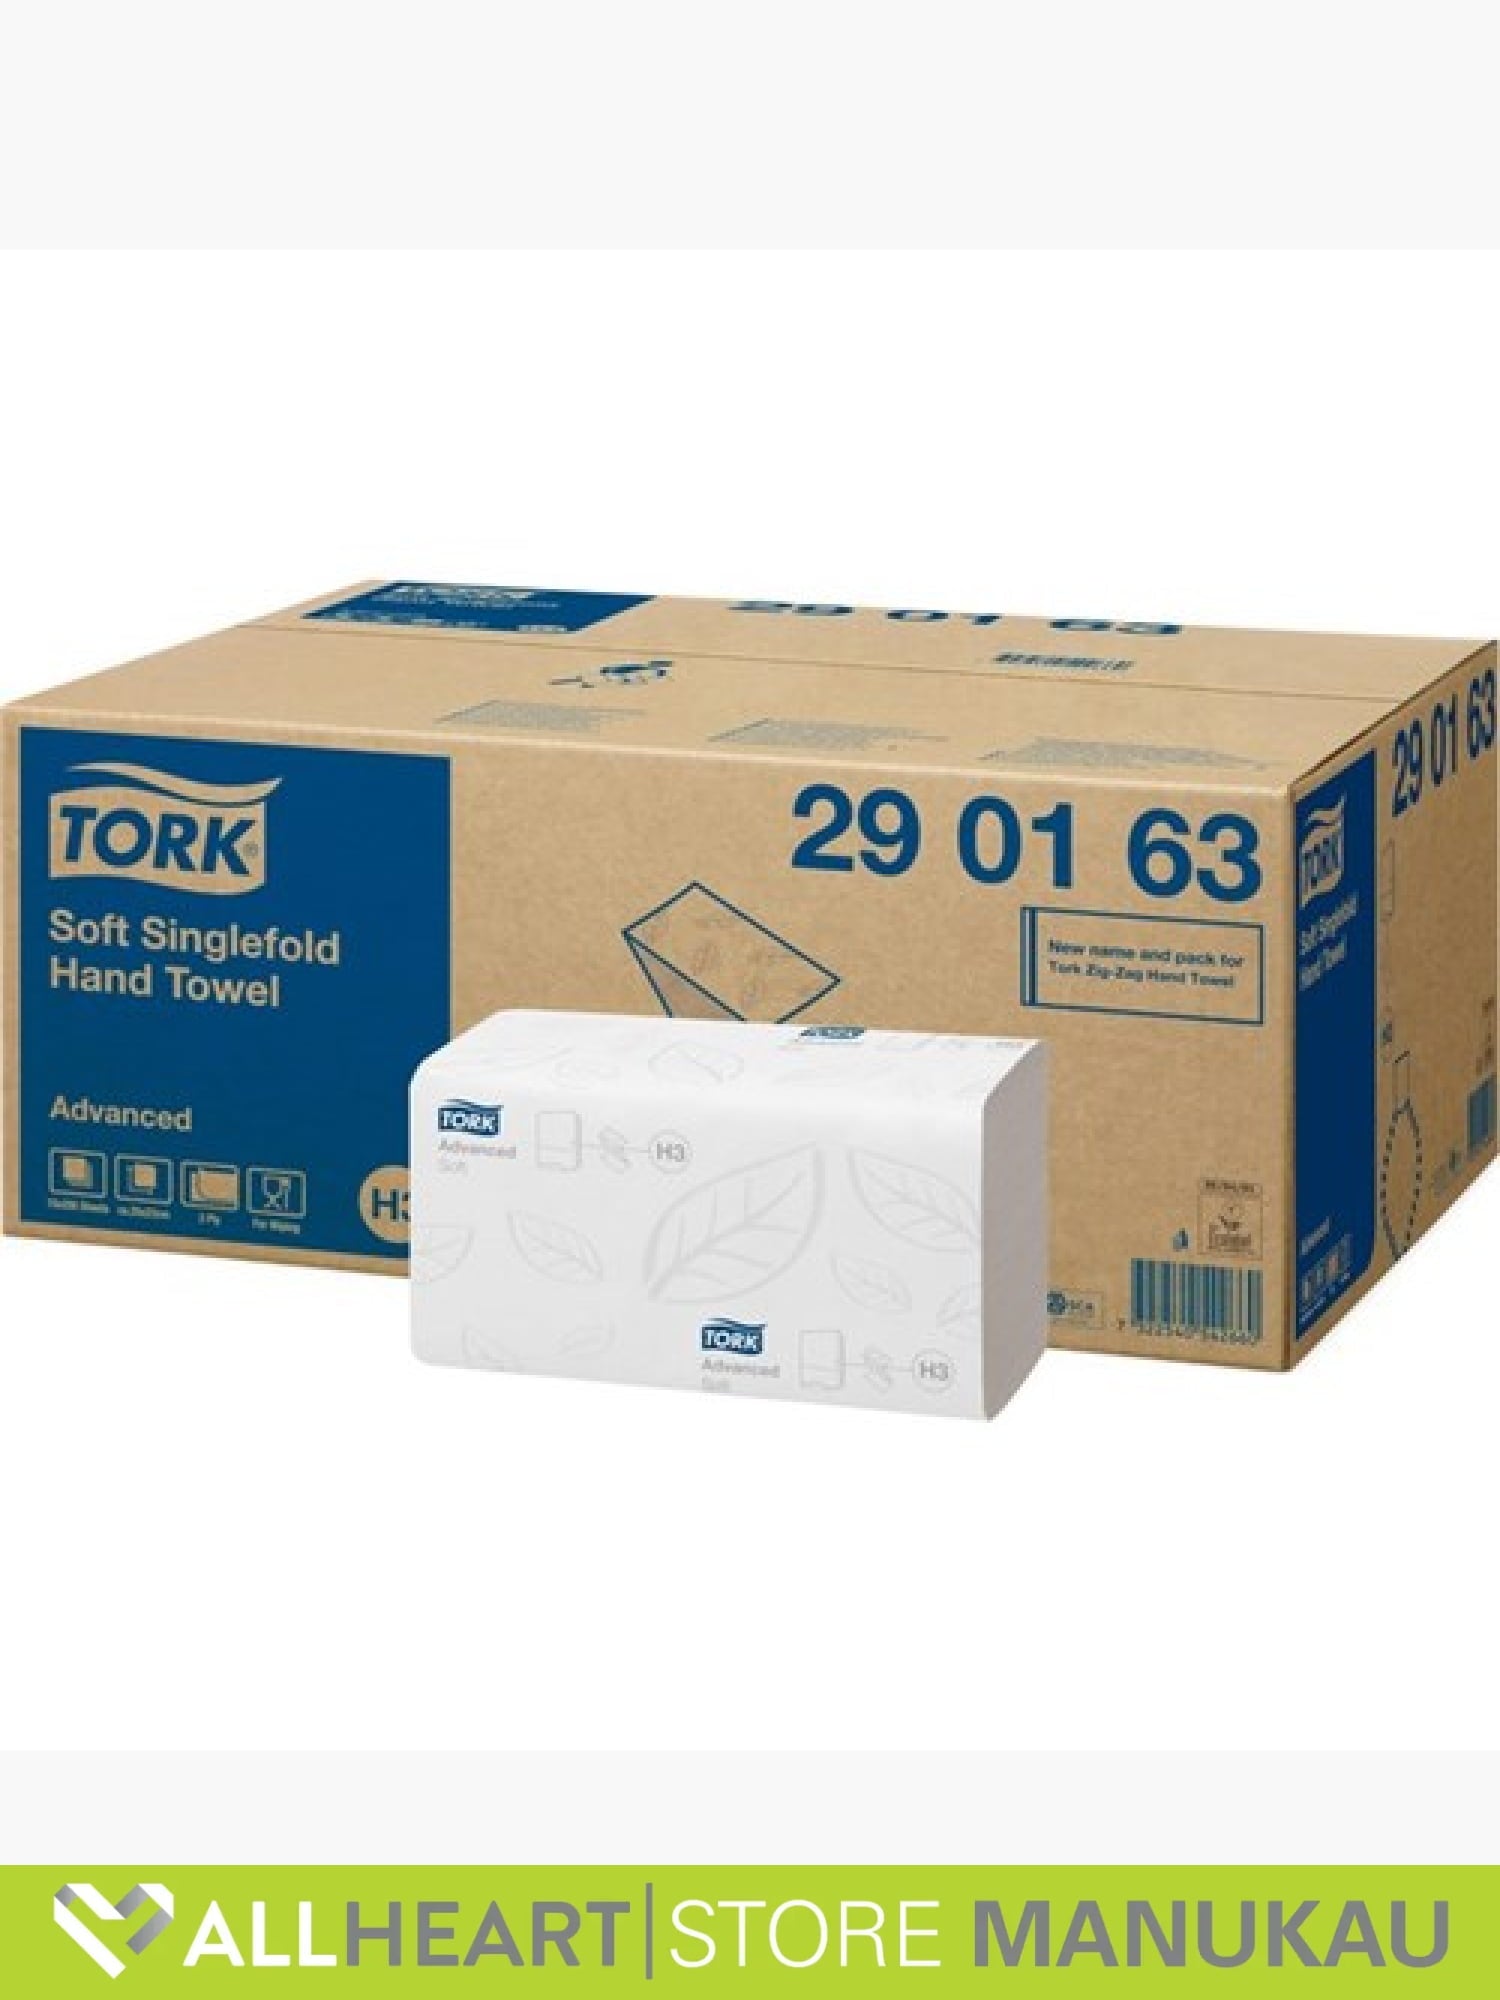 Tork - Single Fold Soft Hand Towel - 29 01 63